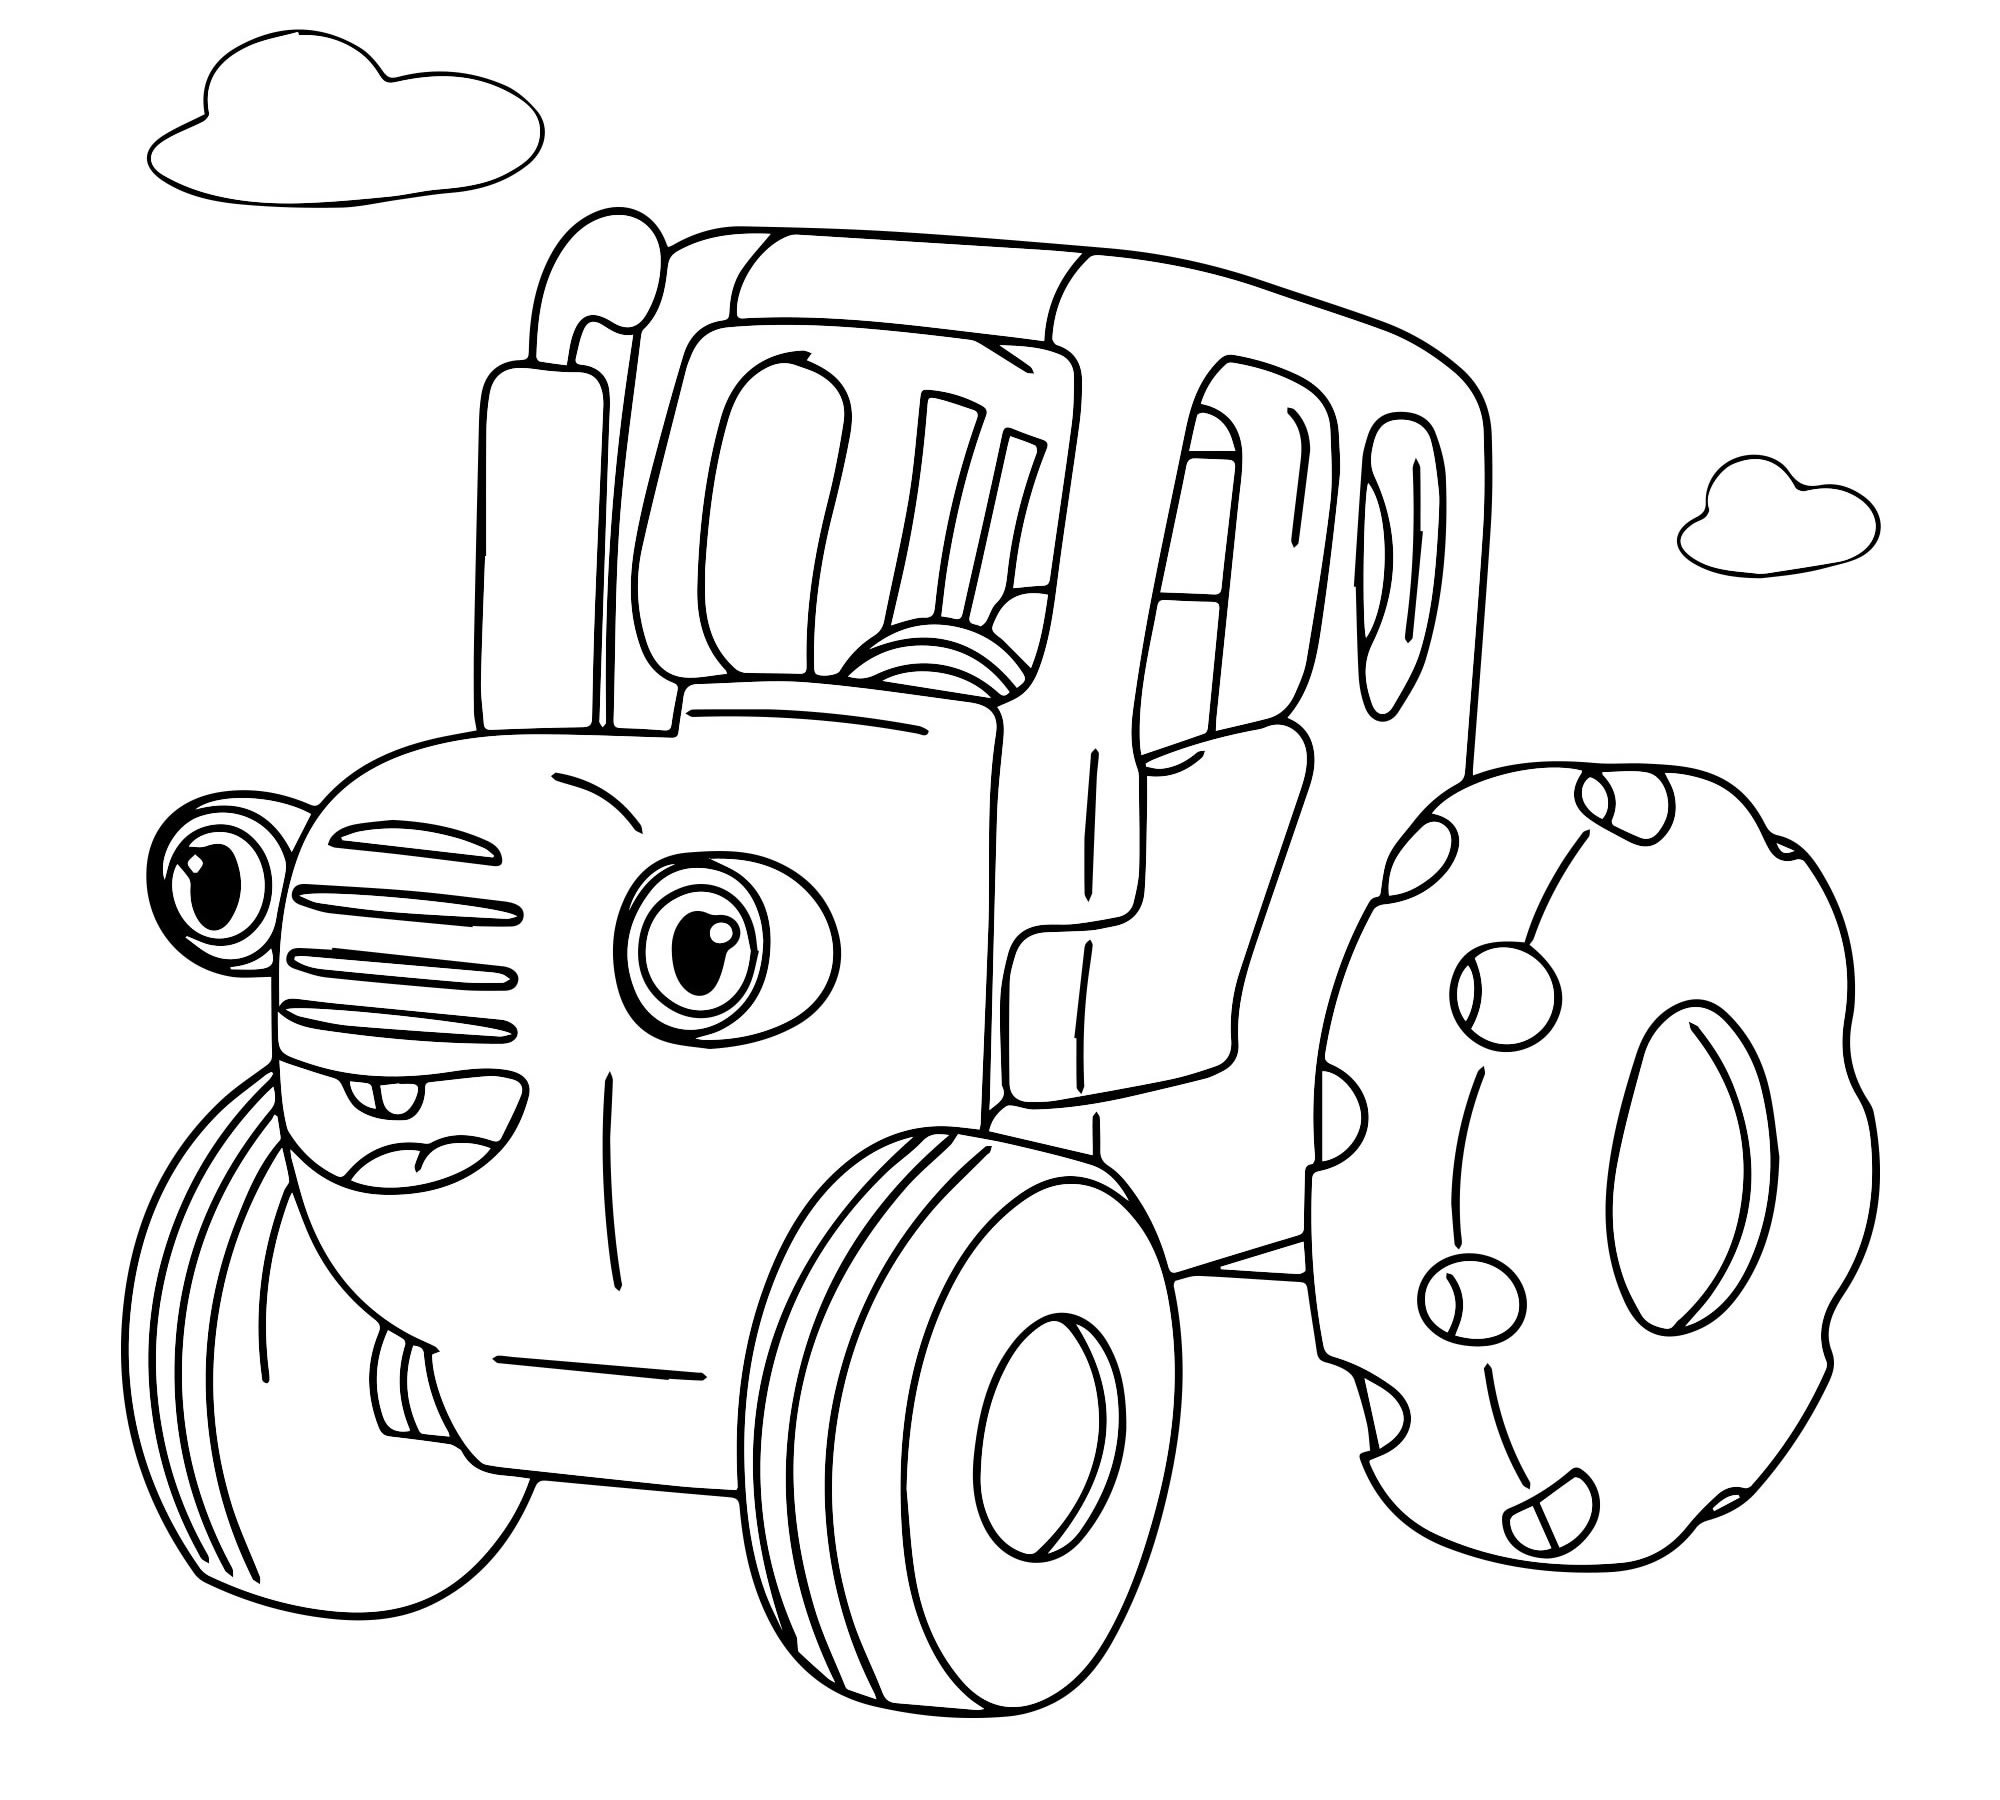 Трактор раскраска для детей 6 7 лет. Трактор для раскрашивания. Трактор для раскрашивания детям. Трактор раскраска для детей. Раскраска «синий трактор».